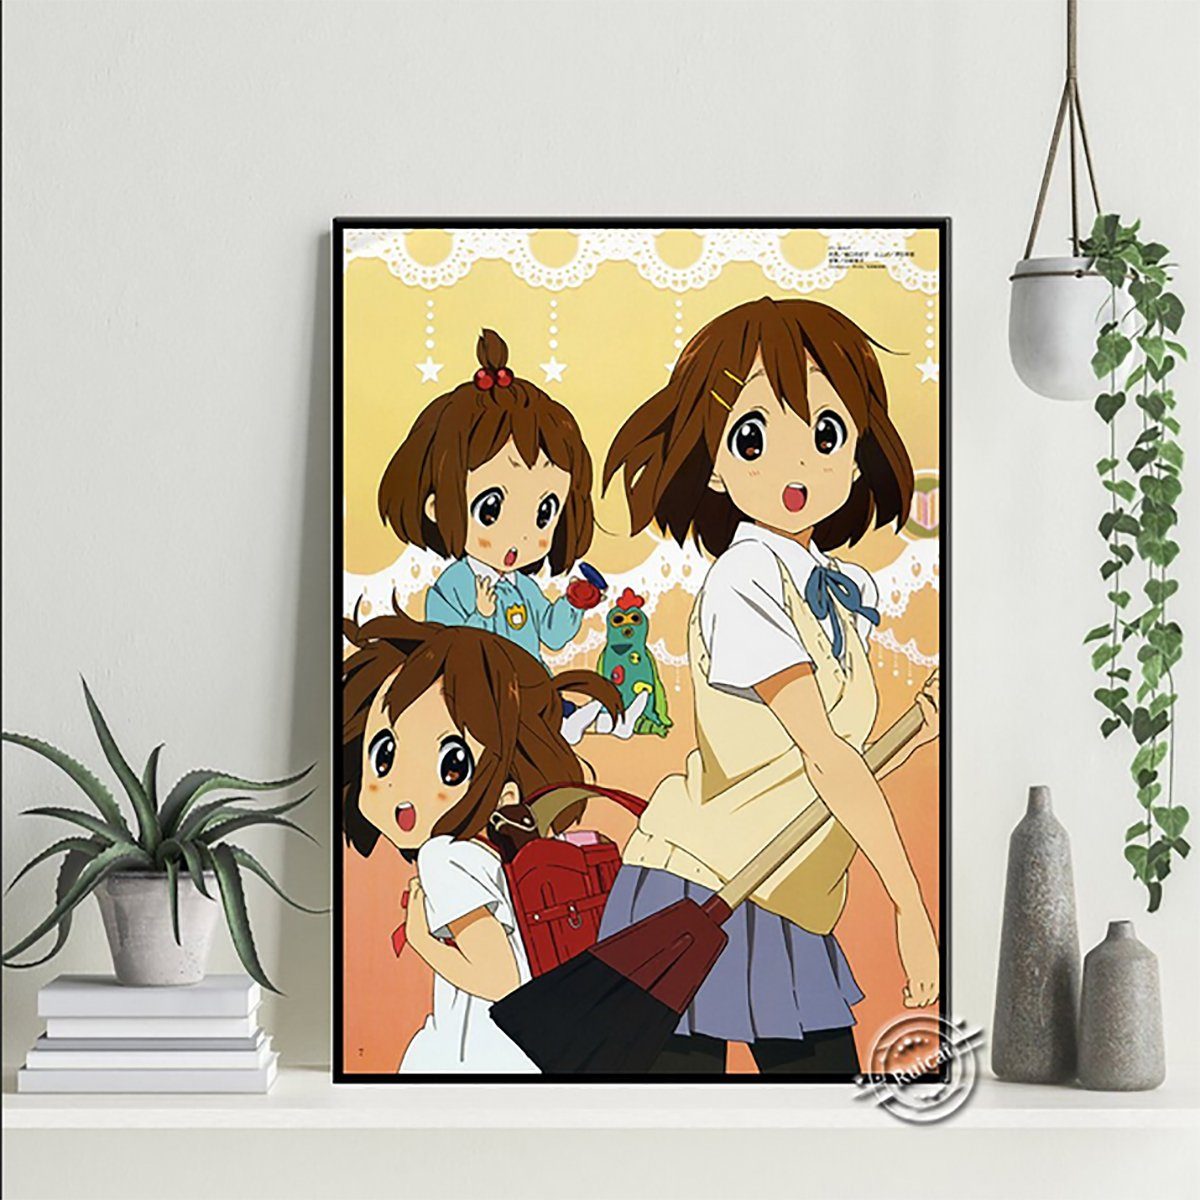 TPFLiving Kunstdruck (OHNE RAHMEN) Poster - Leinwand - Wandbild, K-ON - Kunstdruck aus der japanischen Anime Fernsehserie - (Yonkoma Manga - Leinwand Wohnzimmer, Leinwand Bilder, Kunstdruck), Leinwand bunt - Größe 13x18cm